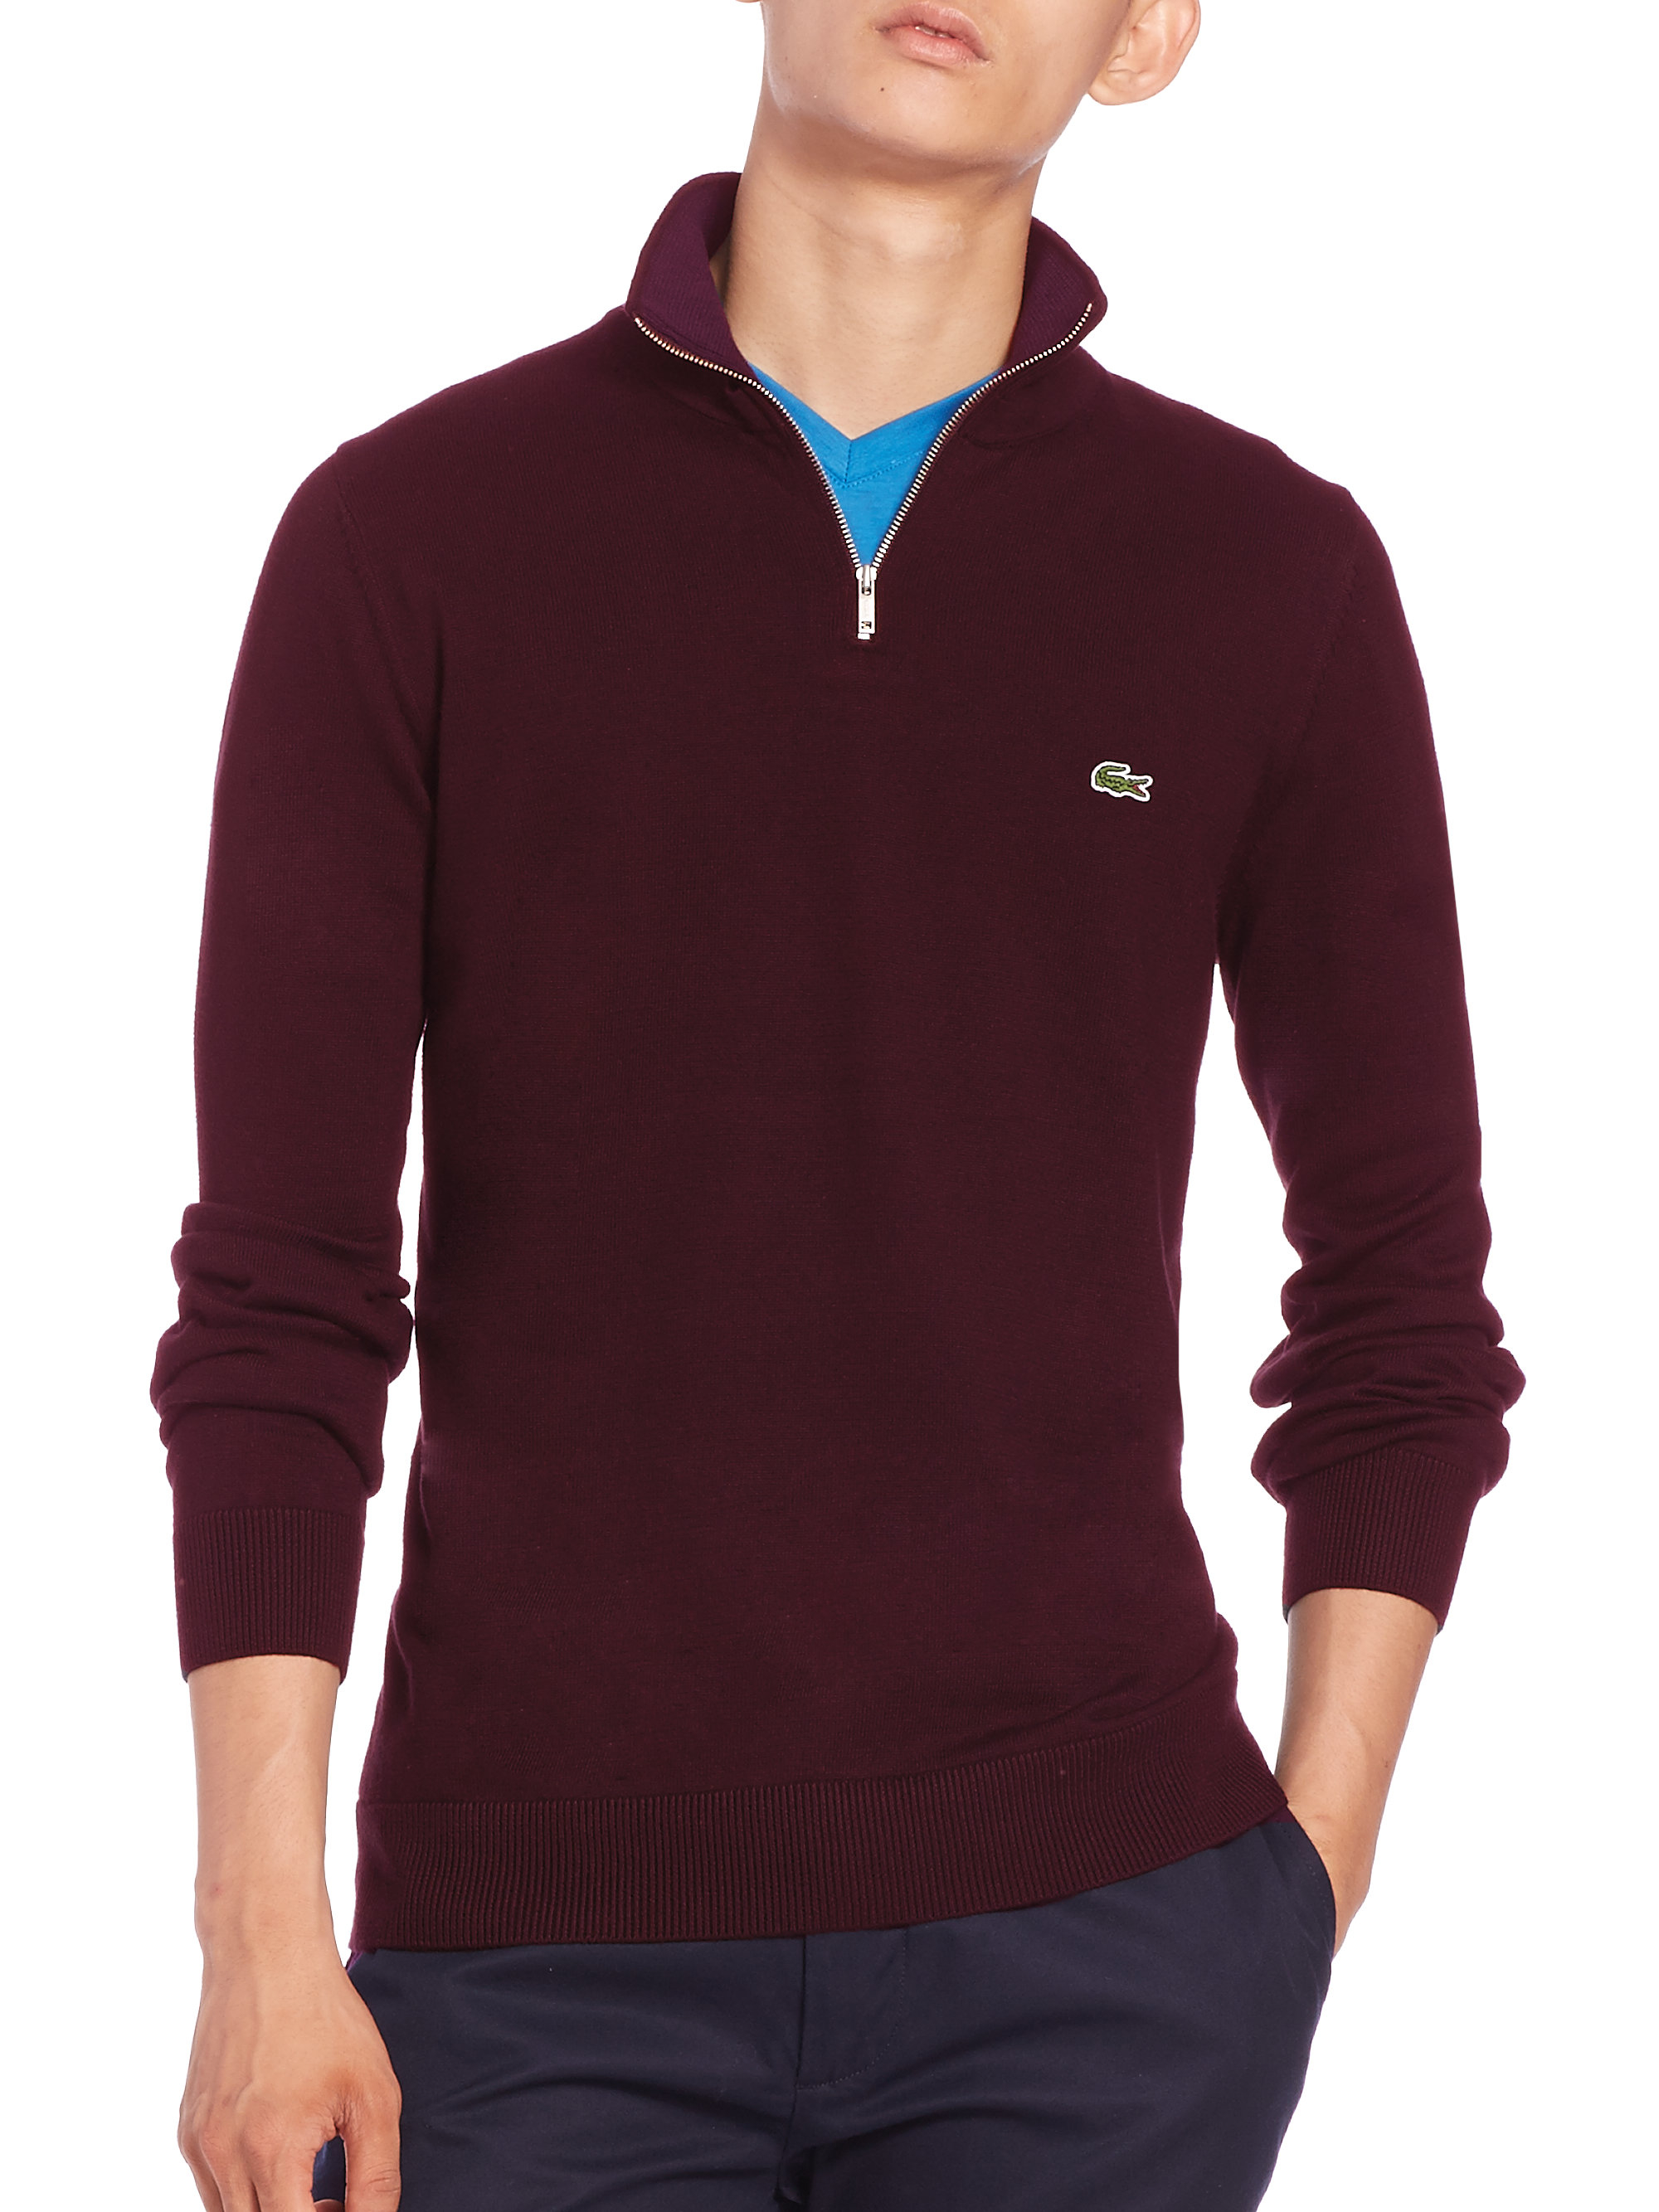 Lyst - Lacoste Quarter-zip Cotton Sweater in Purple for Men